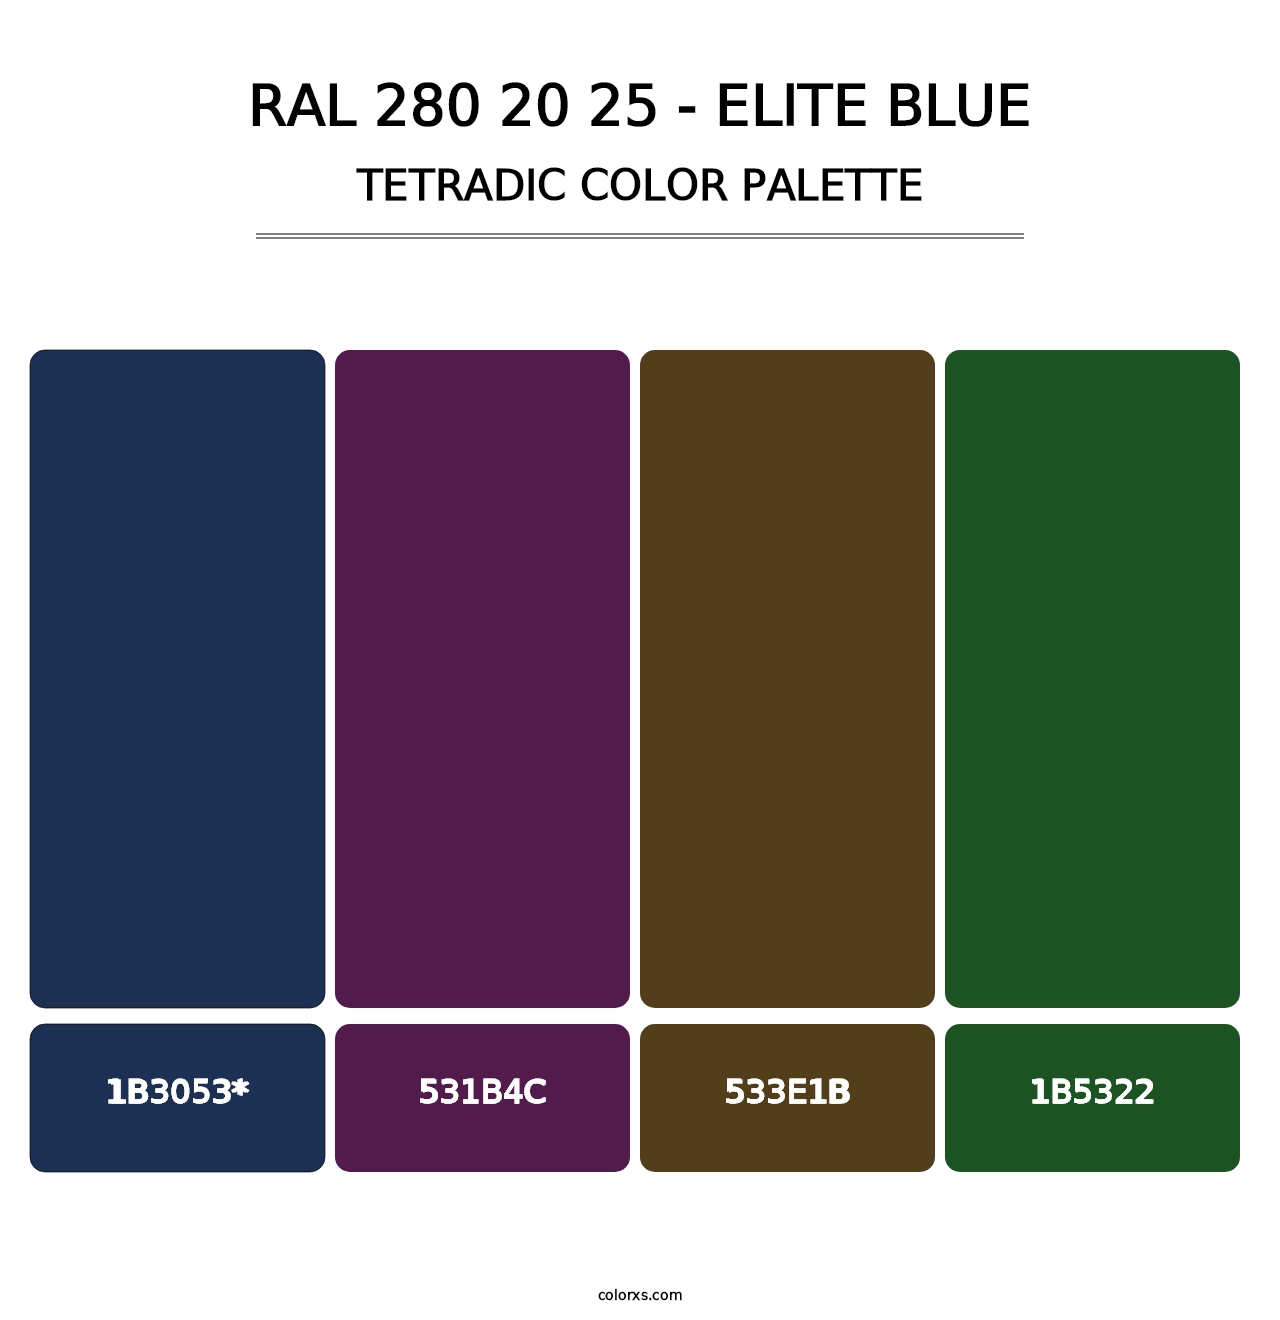 RAL 280 20 25 - Elite Blue - Tetradic Color Palette